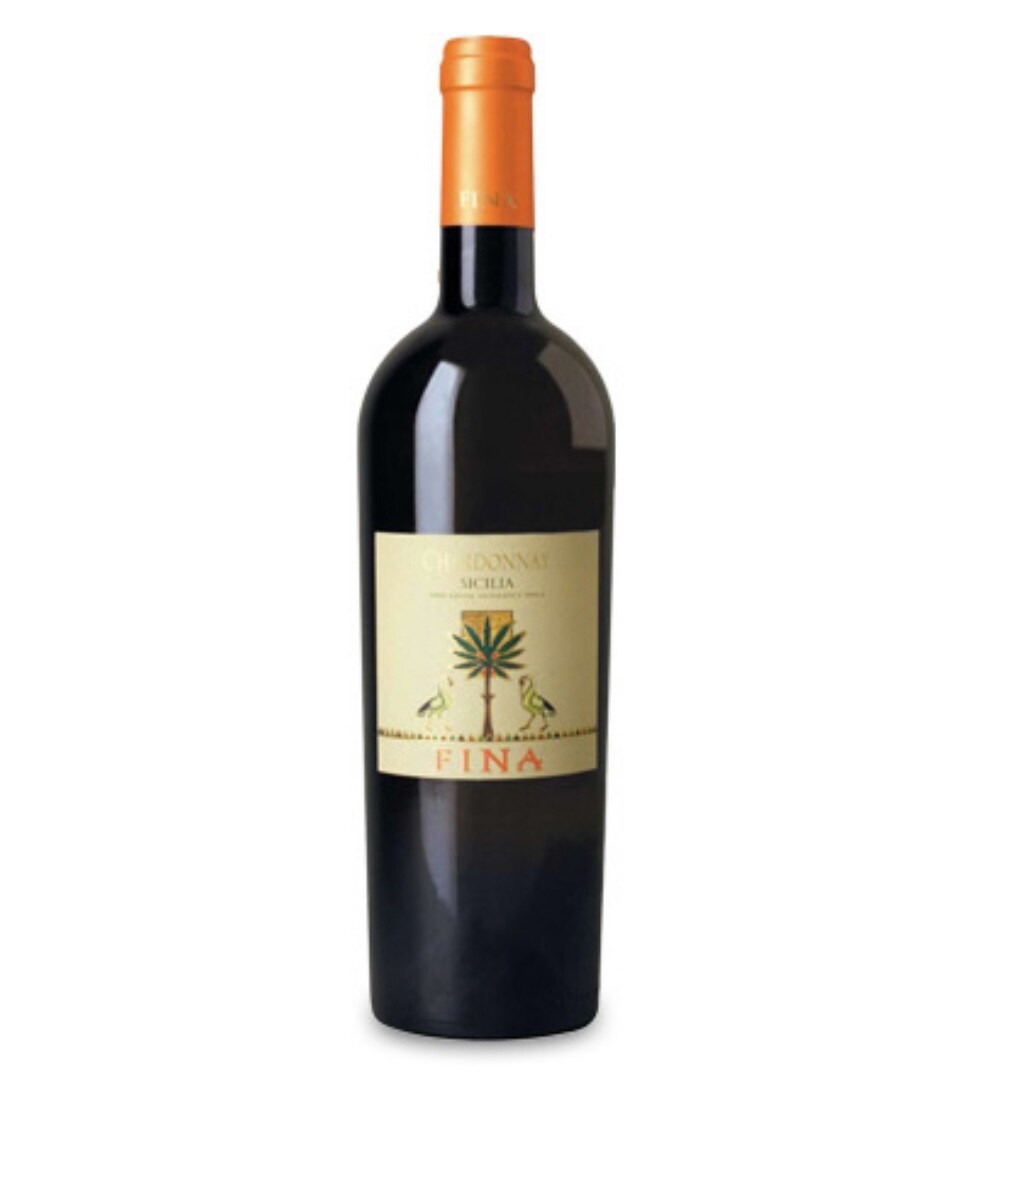 Chardonnay 2019 BIO IGP Terre Siciliane
(Chardonnay ; affinato in Barrique) ; Fina - 75cl